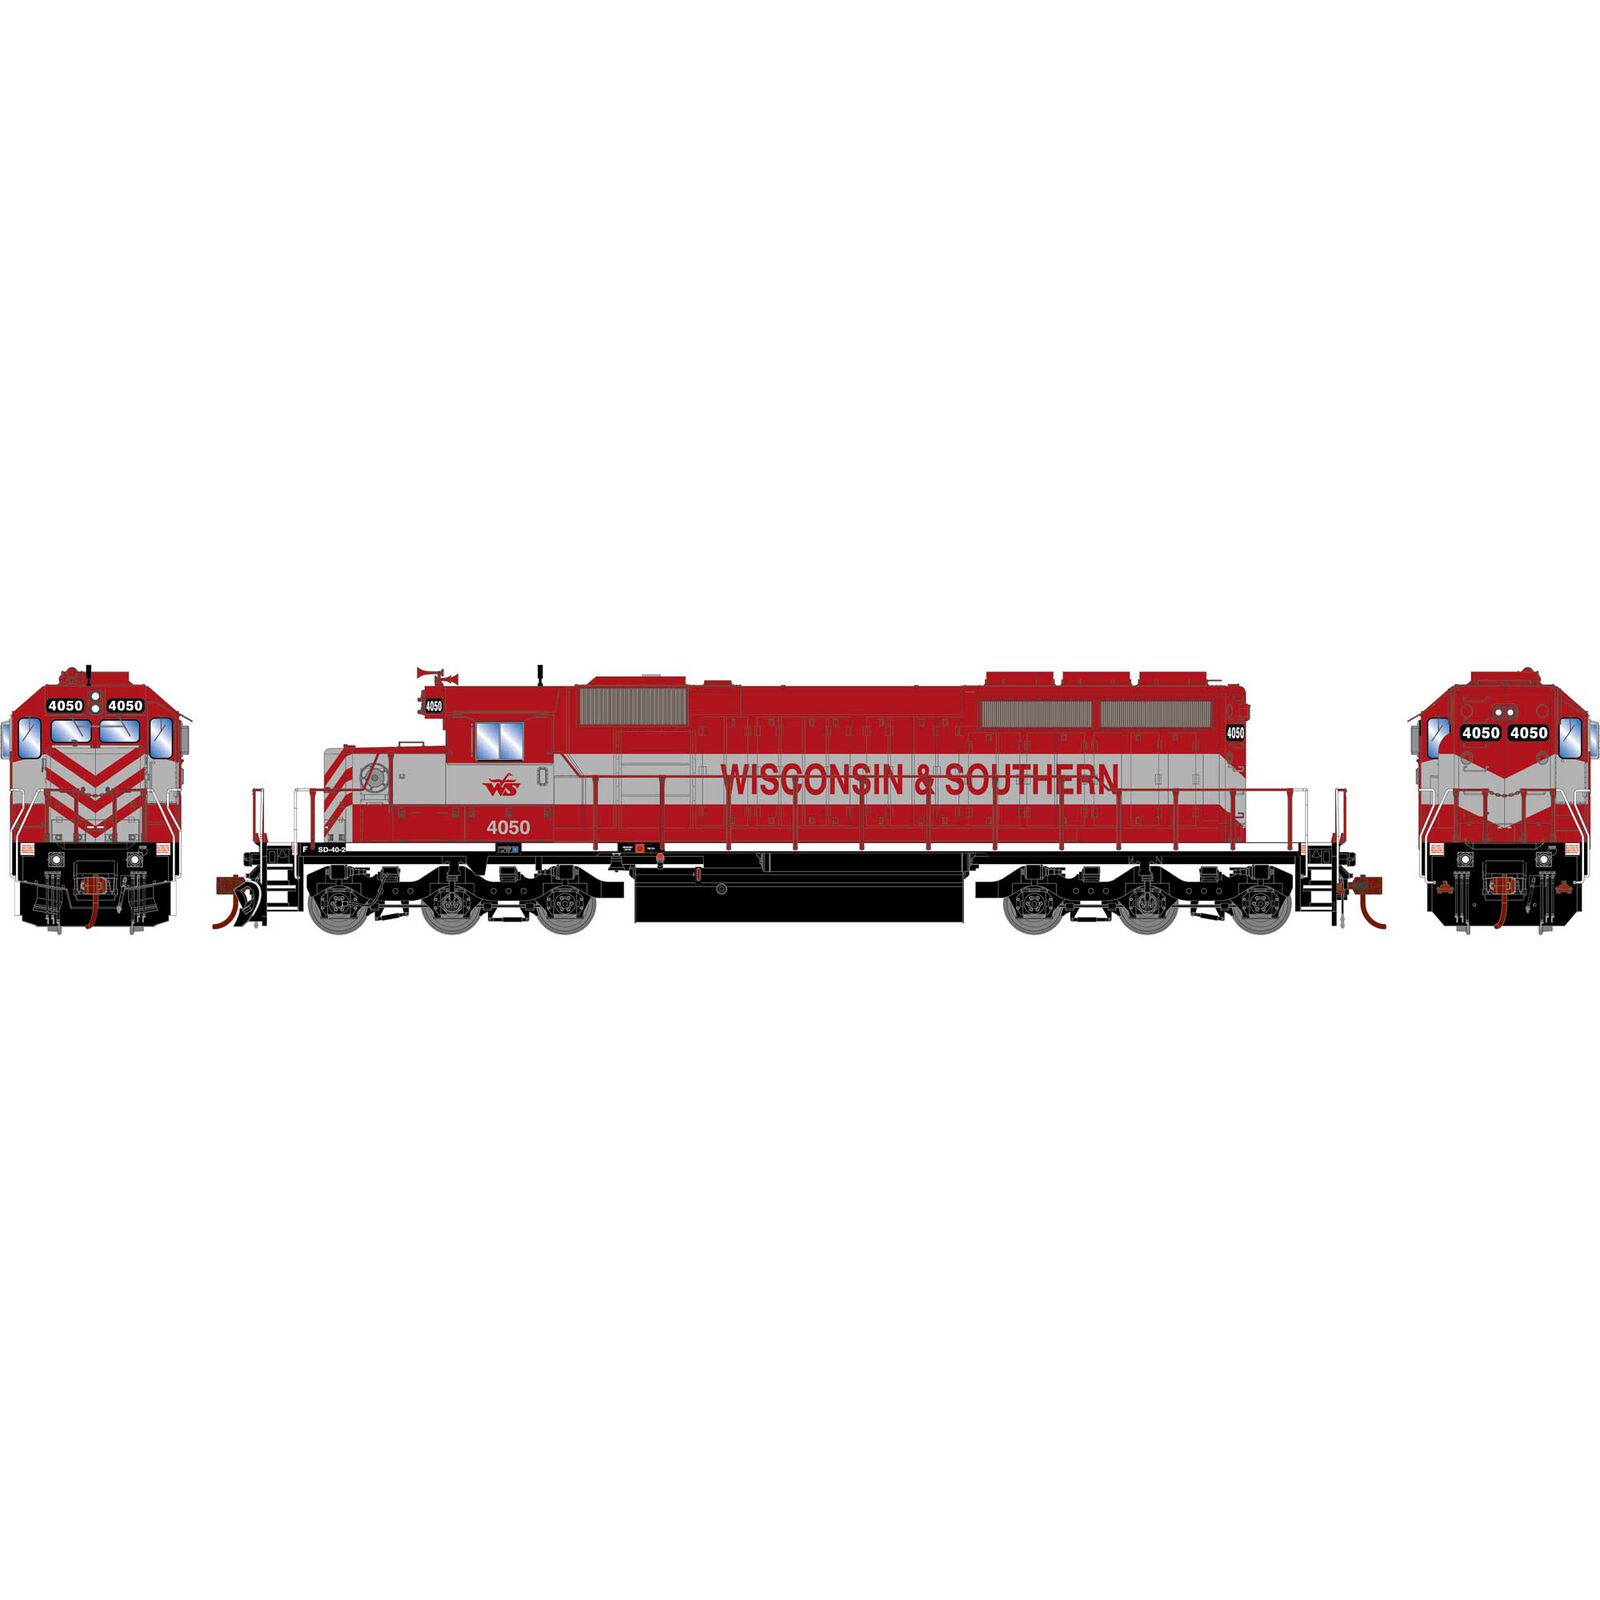 HO EMD SD40-2 Locomotive with DCC & Sound, WAMX #4050